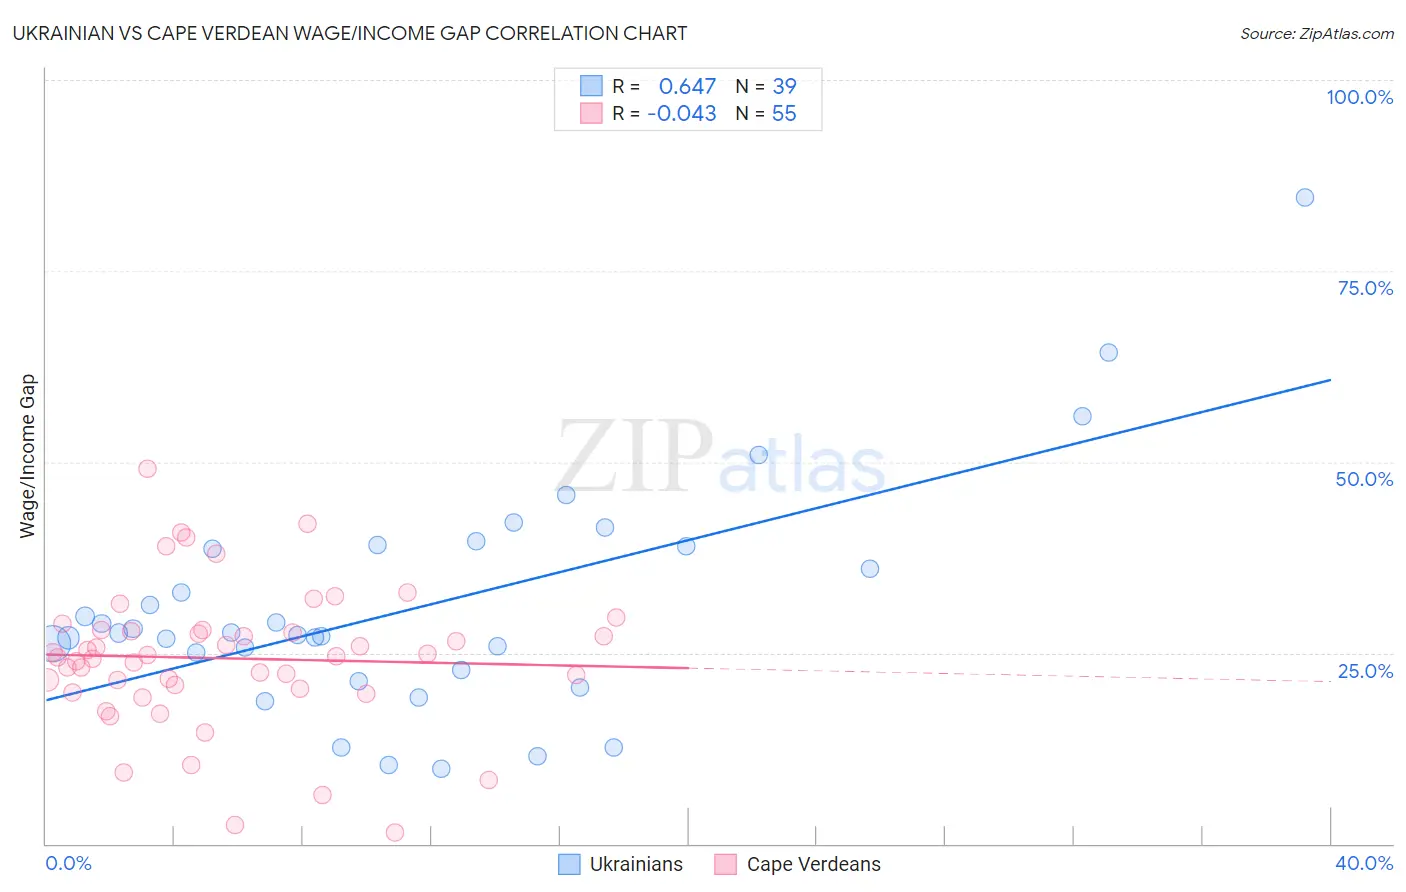 Ukrainian vs Cape Verdean Wage/Income Gap